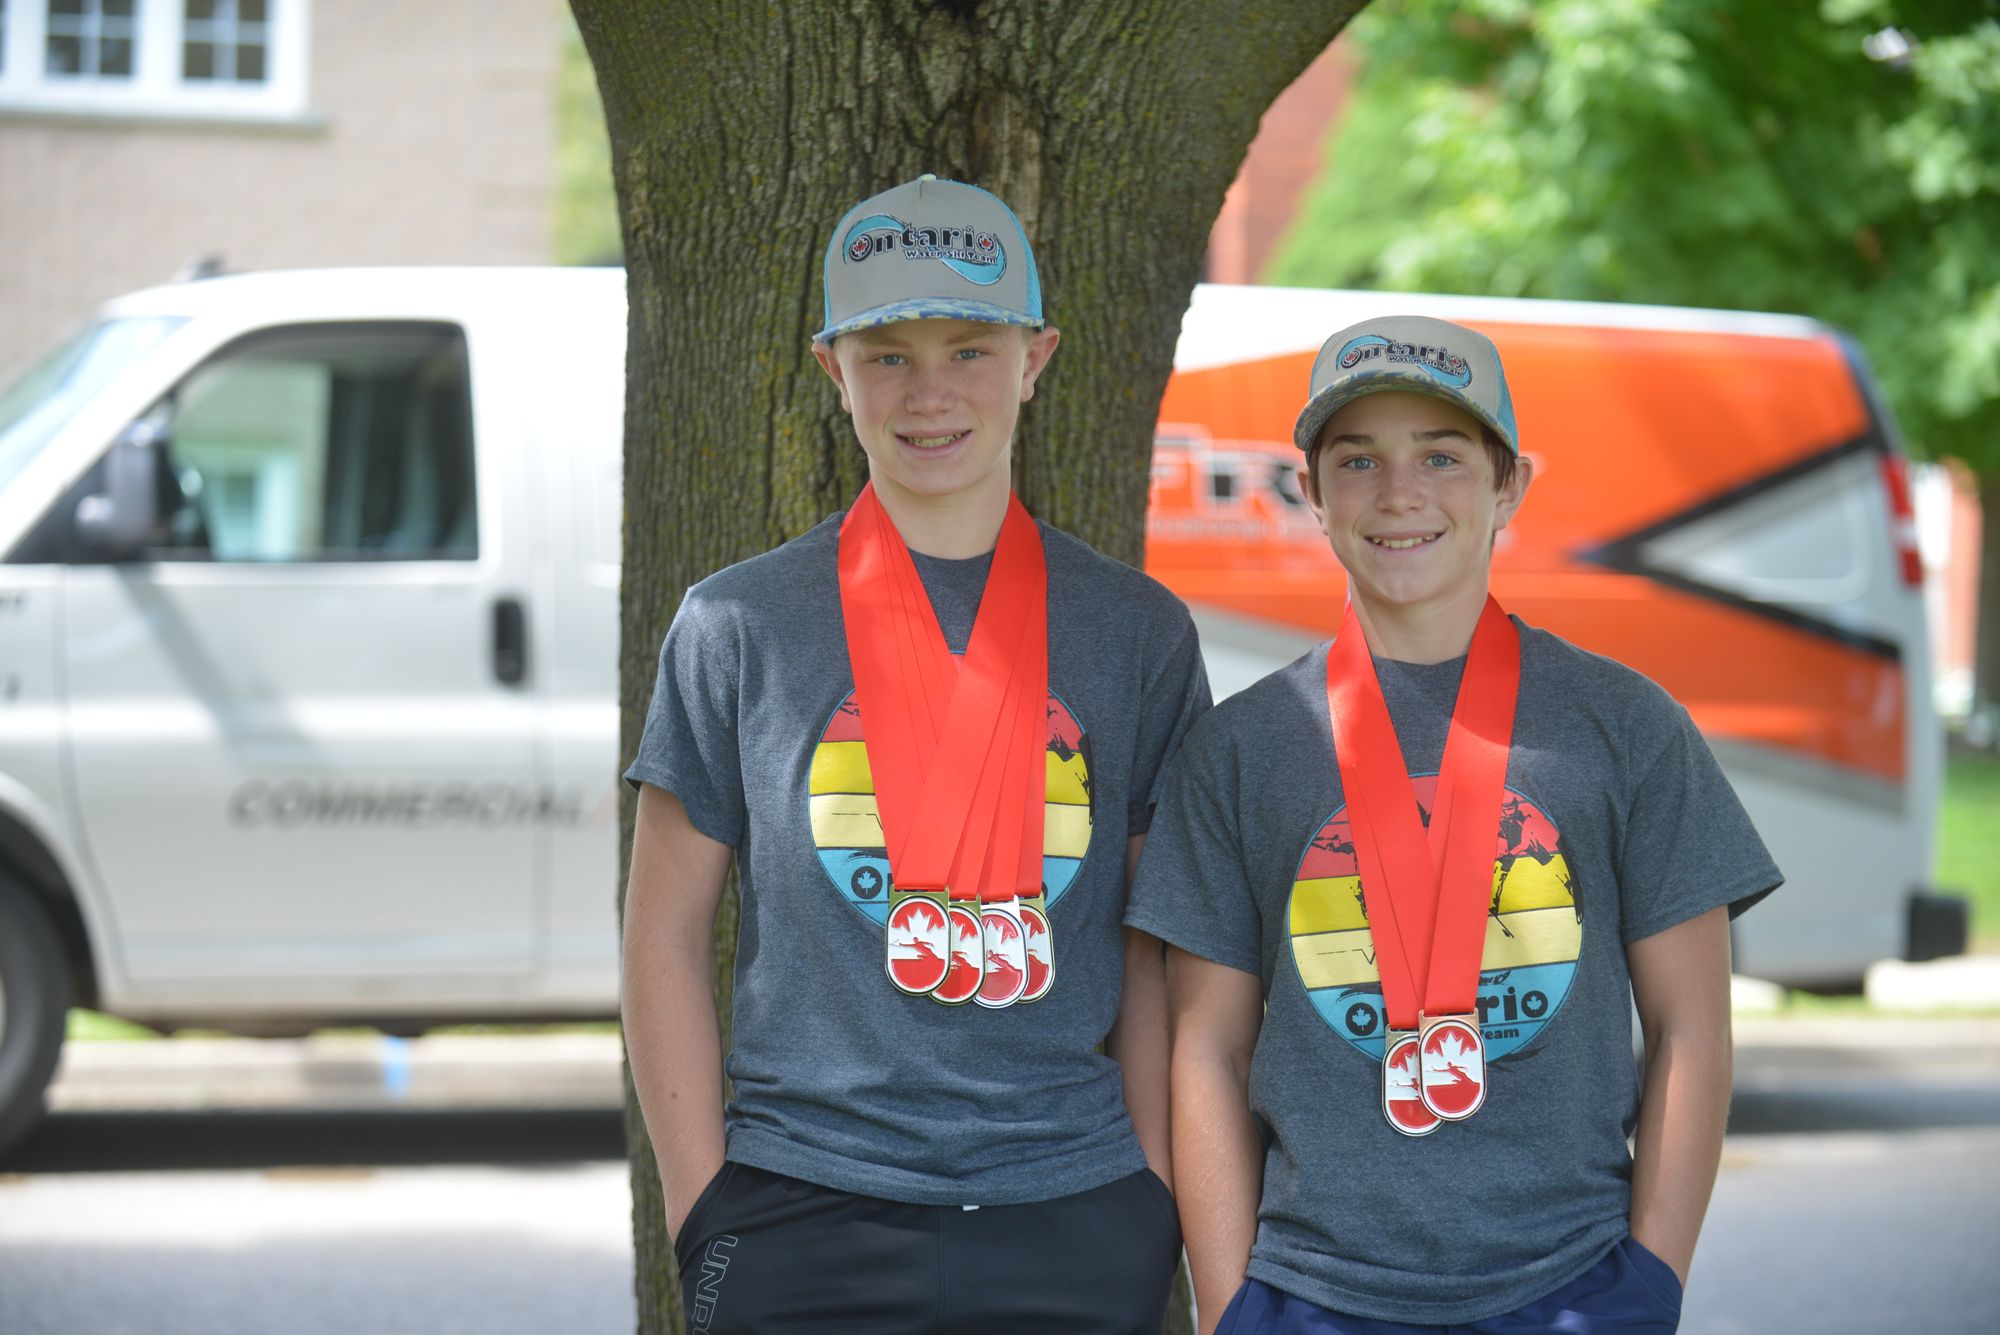 Conestogo siblings excel at Canadian Water Ski Championships